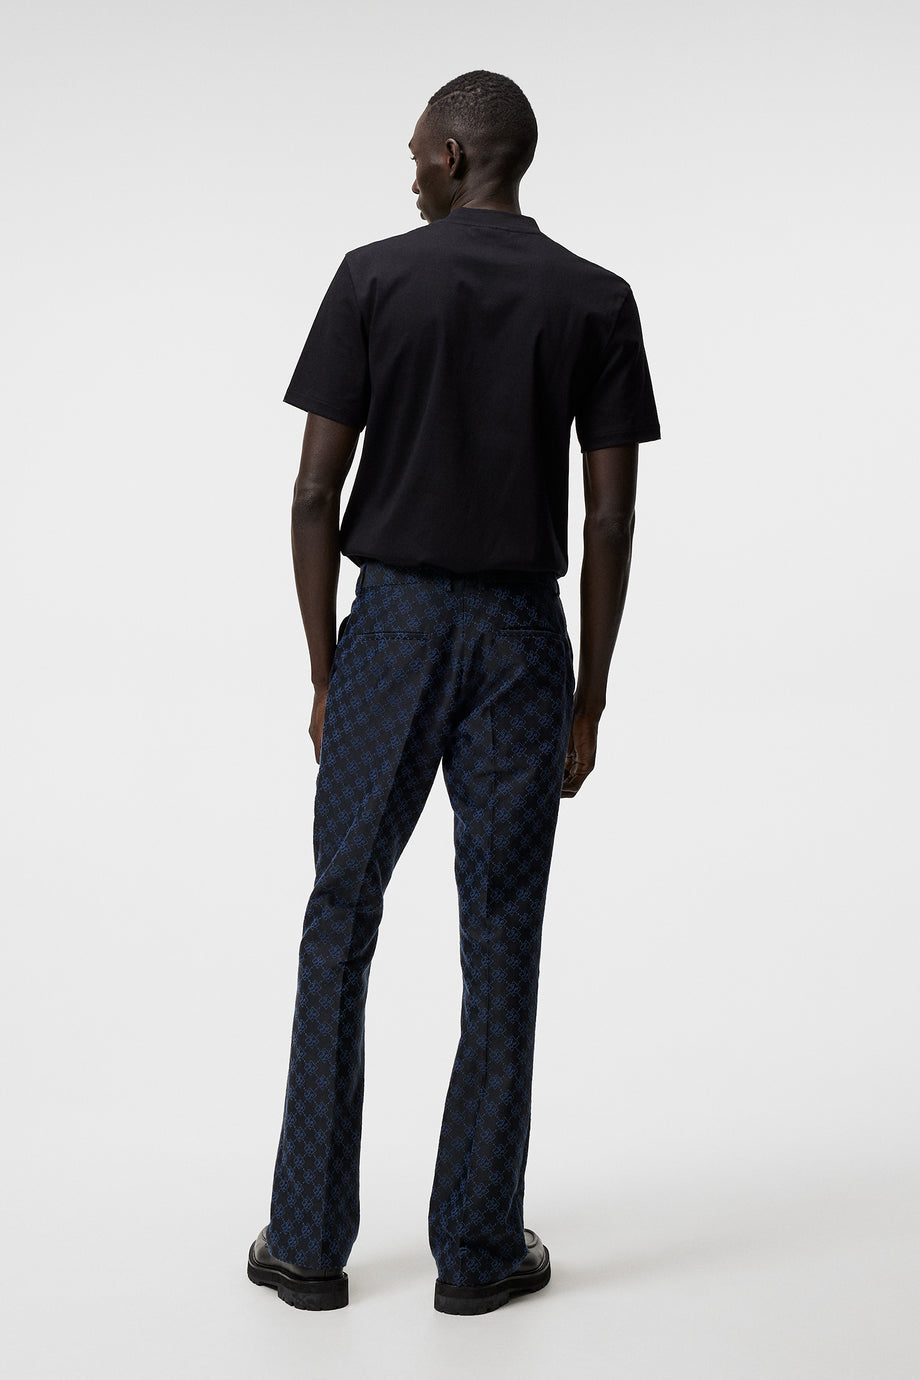 Louis Vuitton Pants For Men  Natural Resource Department